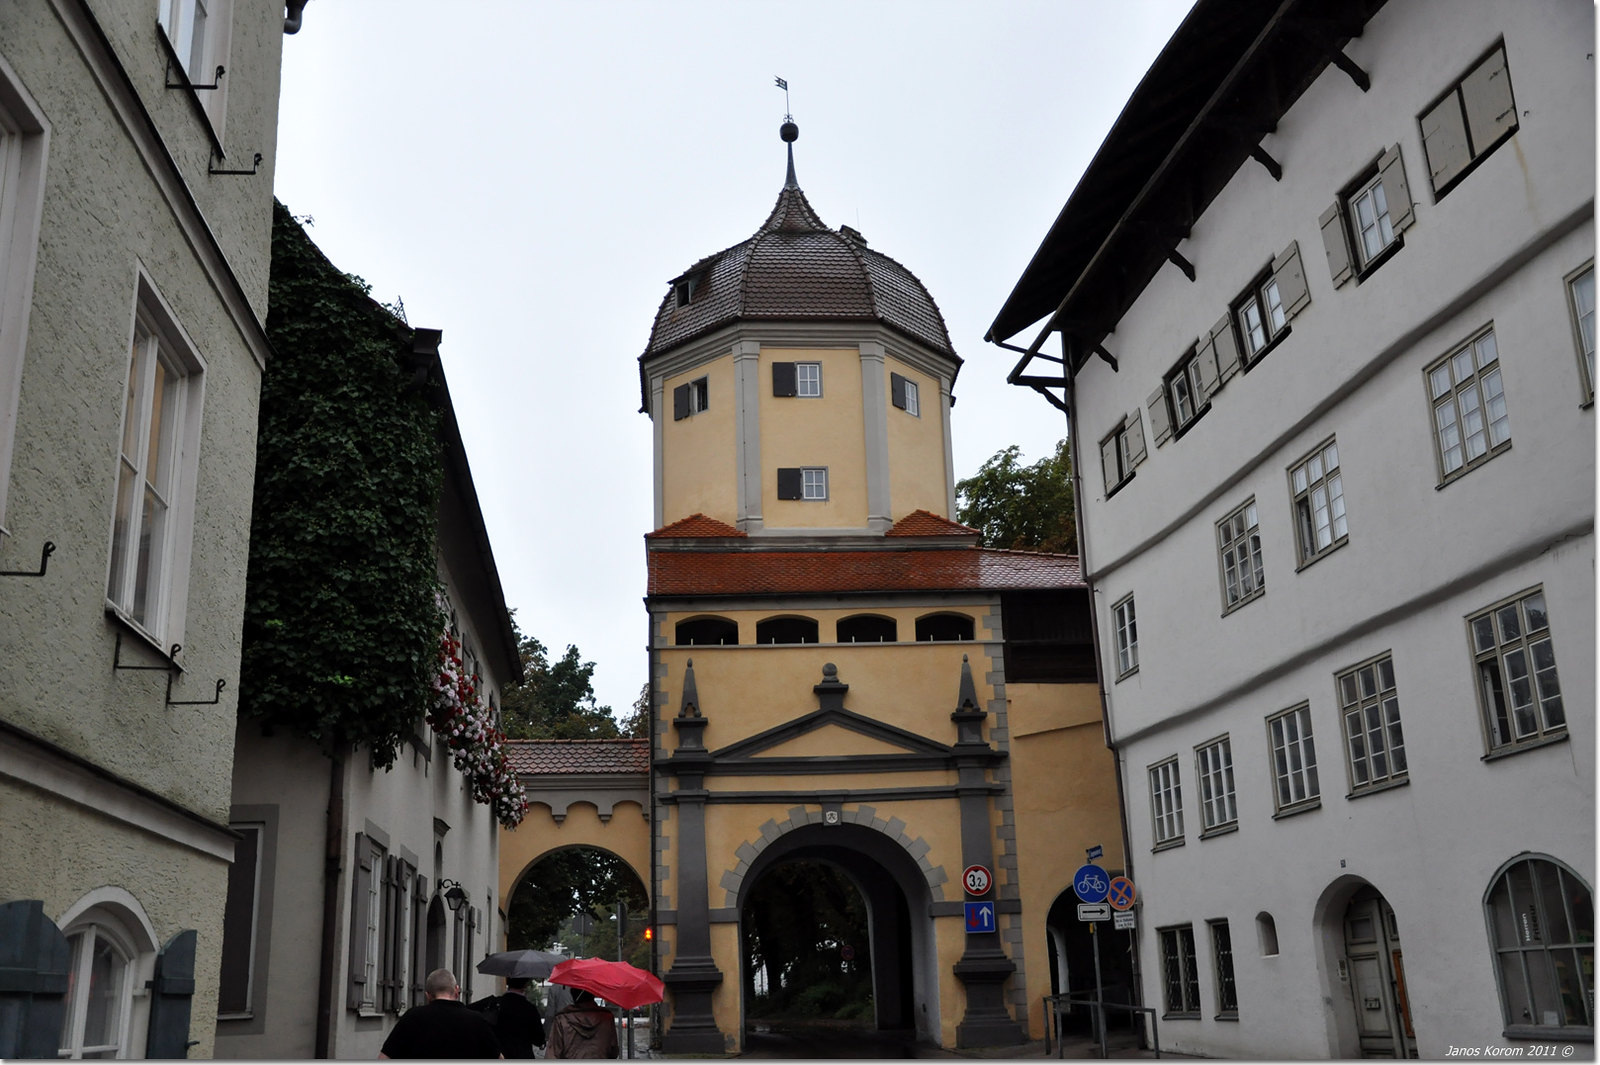 15 Best Things To Do in Memmingen, Germany